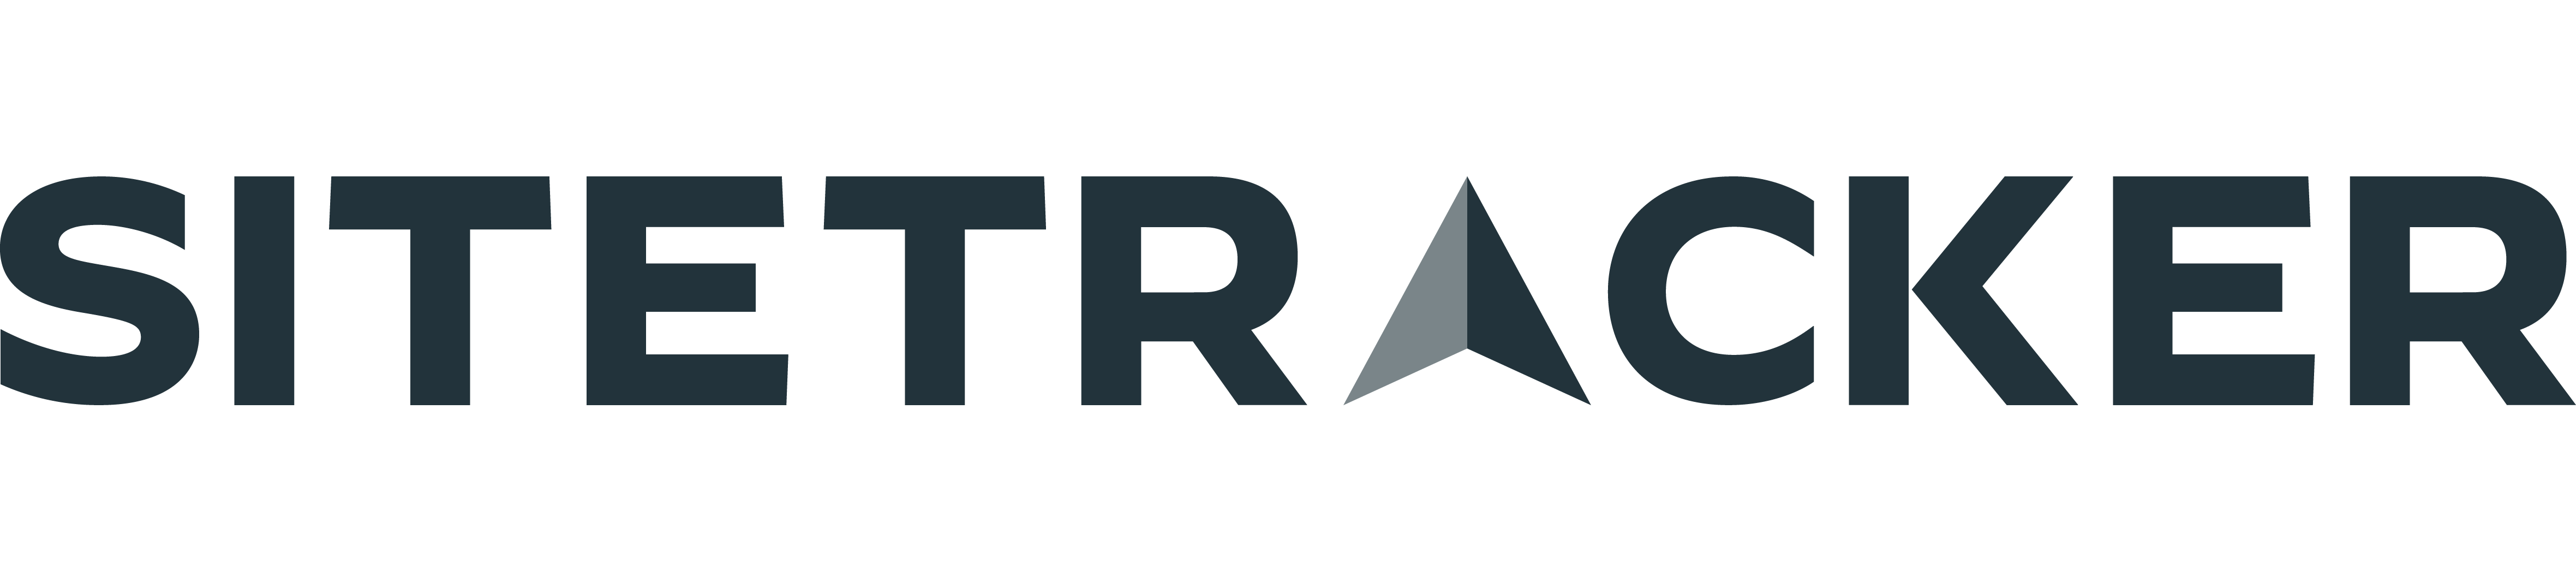 Sitetracker-Logo-atlassian-01